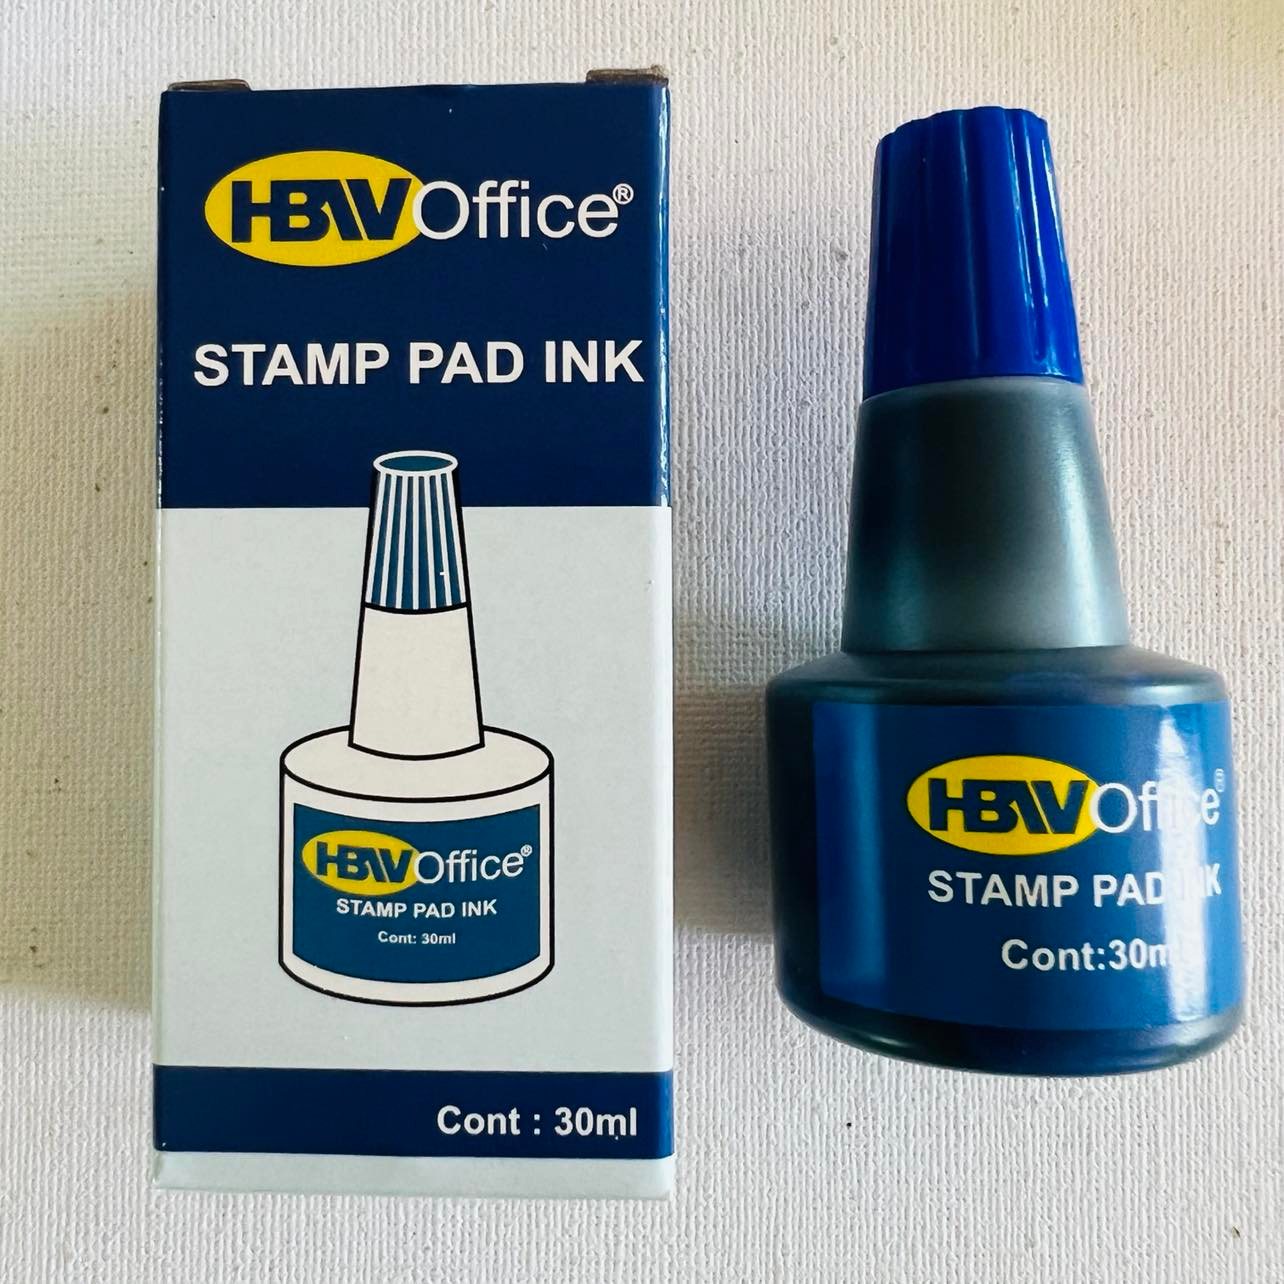 HBWOffice Stamp Pad Ink - HBW